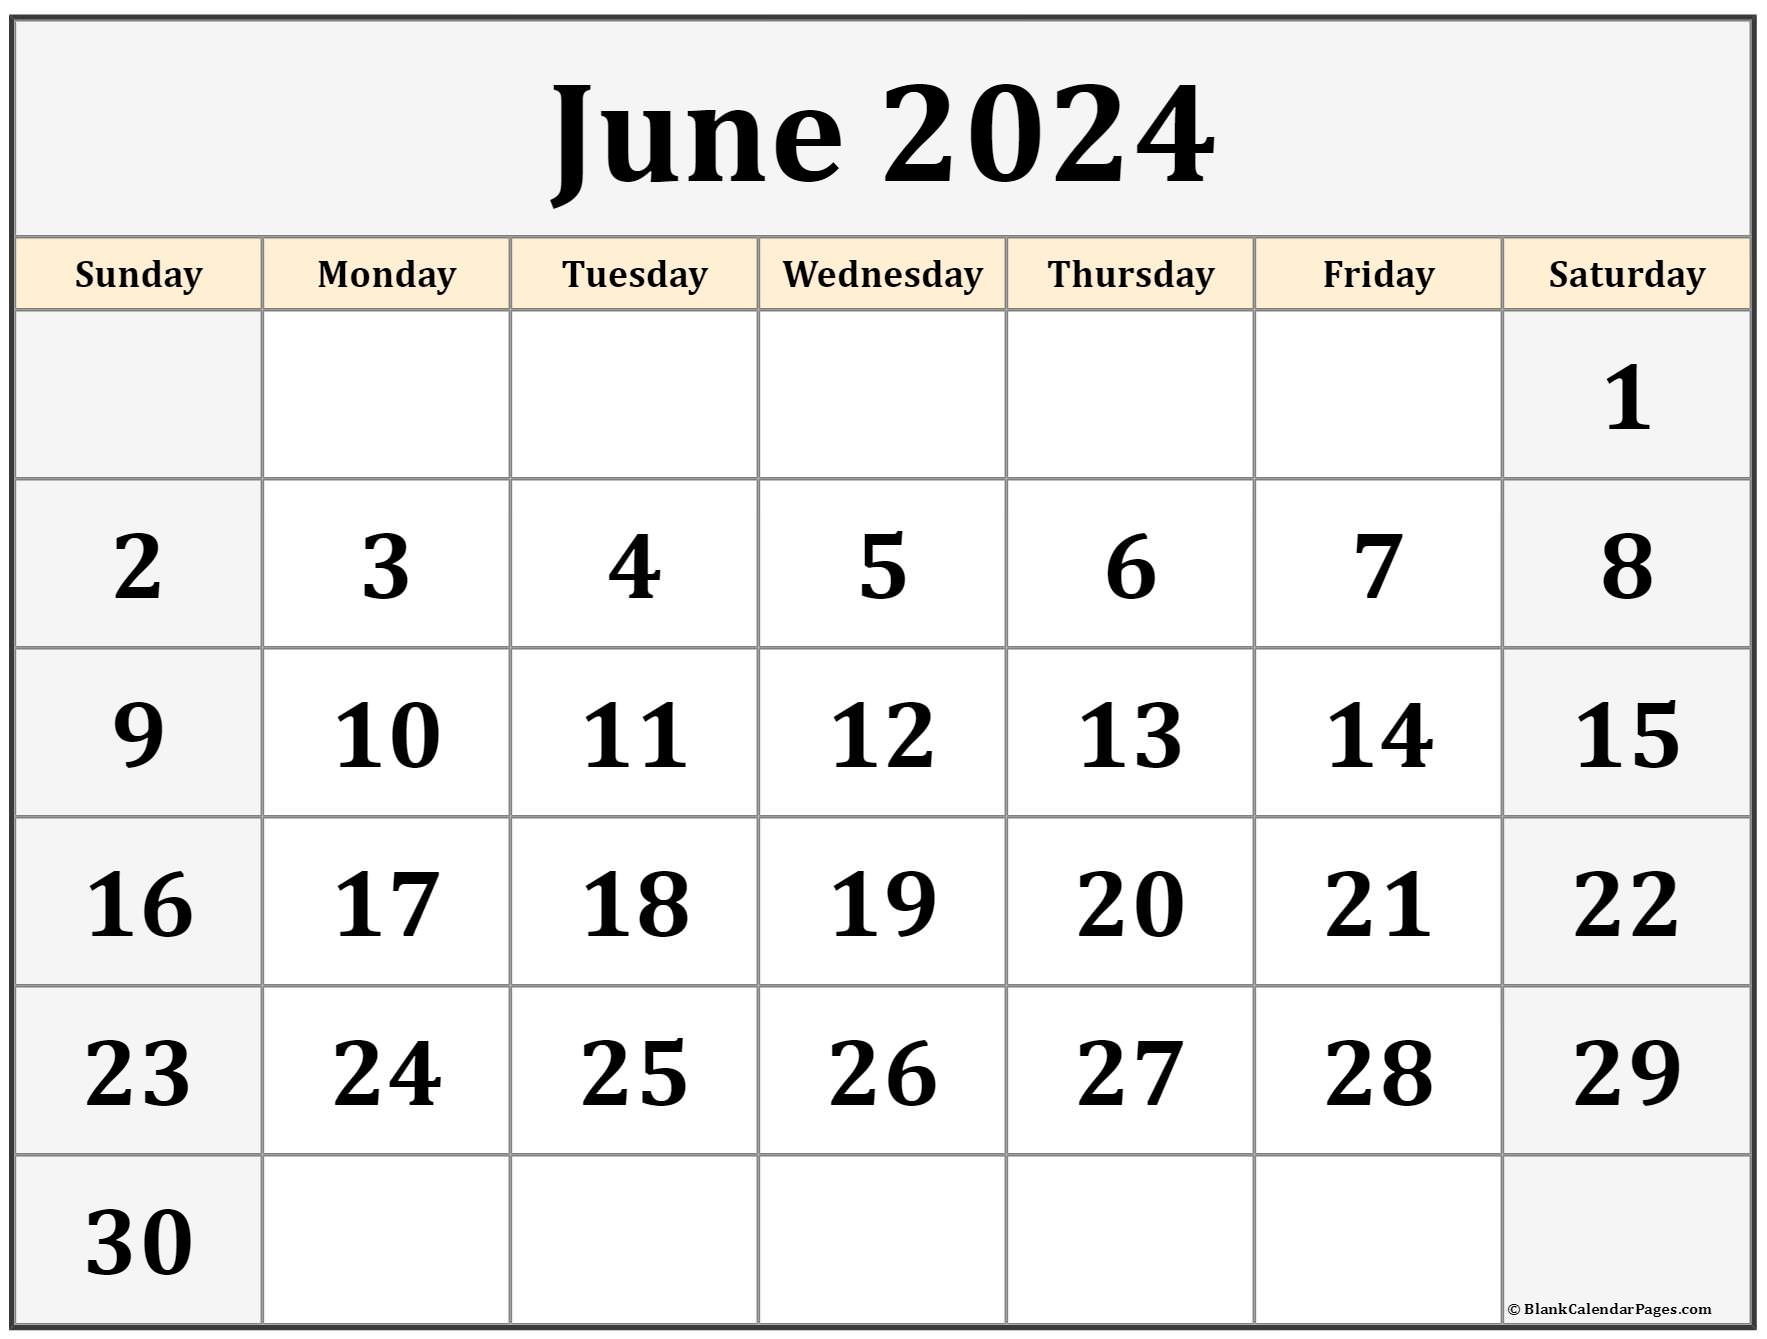 June 2024 Calendar Telangana Latest Perfect The Best Famous Calendar 2024 Easter Holidays